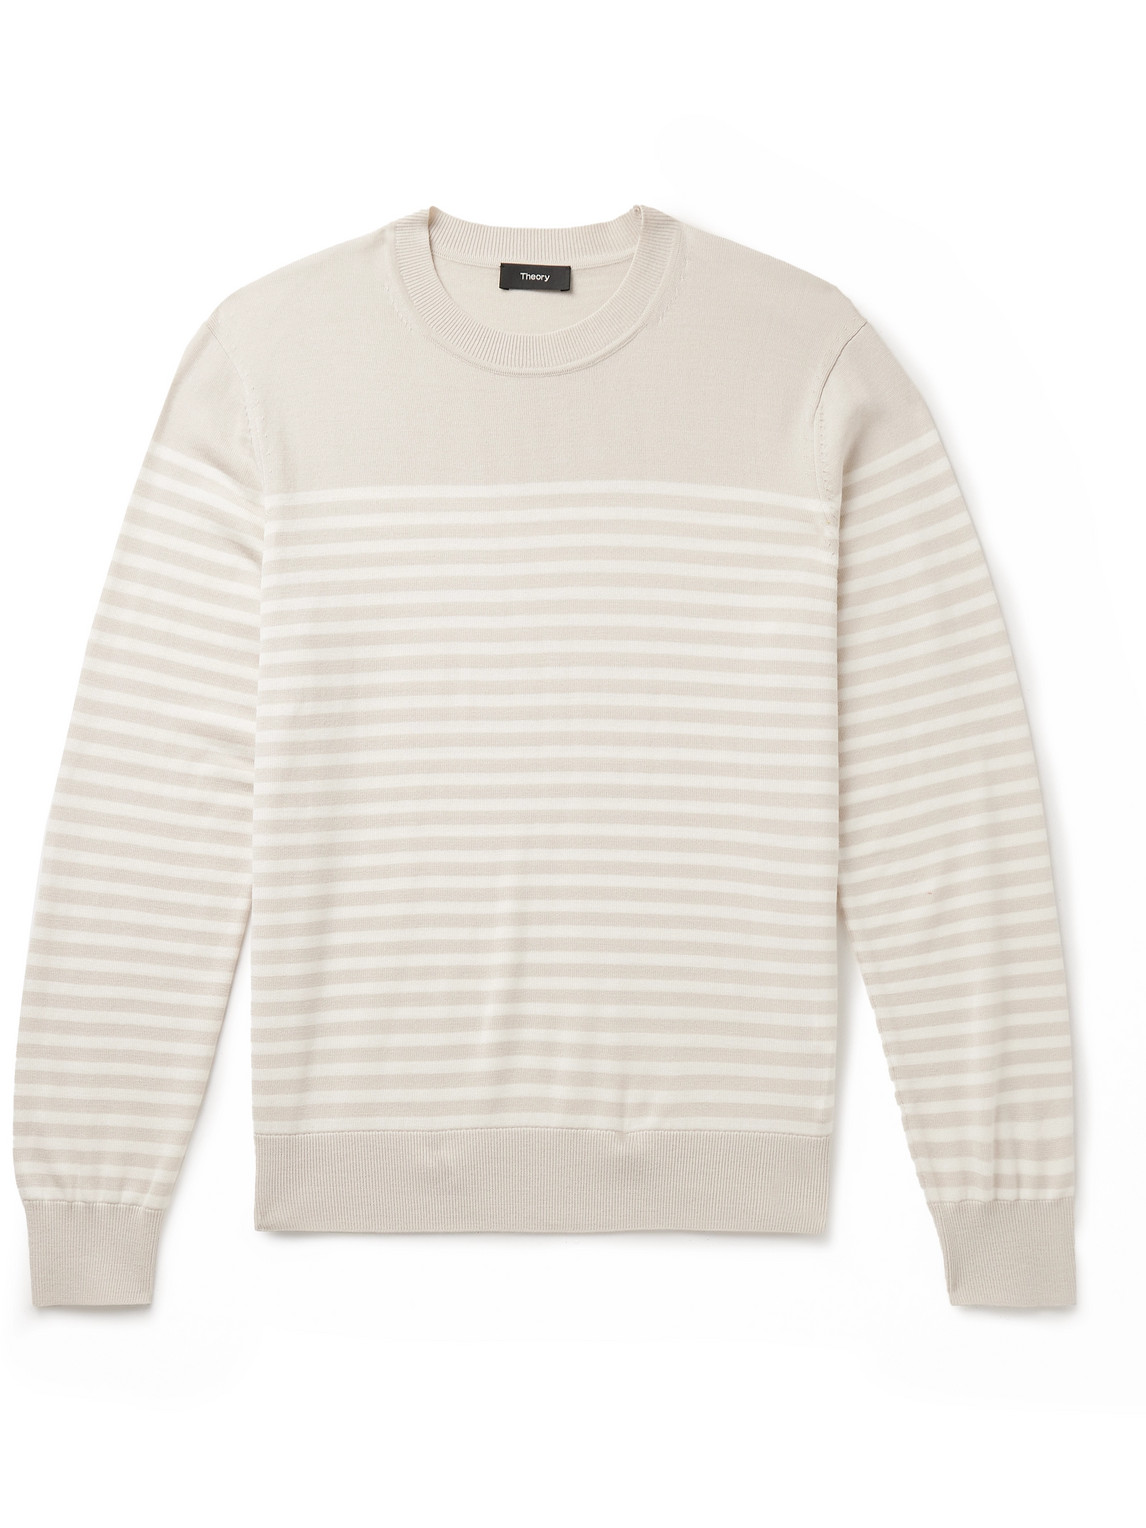 Theory Striped Crewneck Sweater In Sand Multi